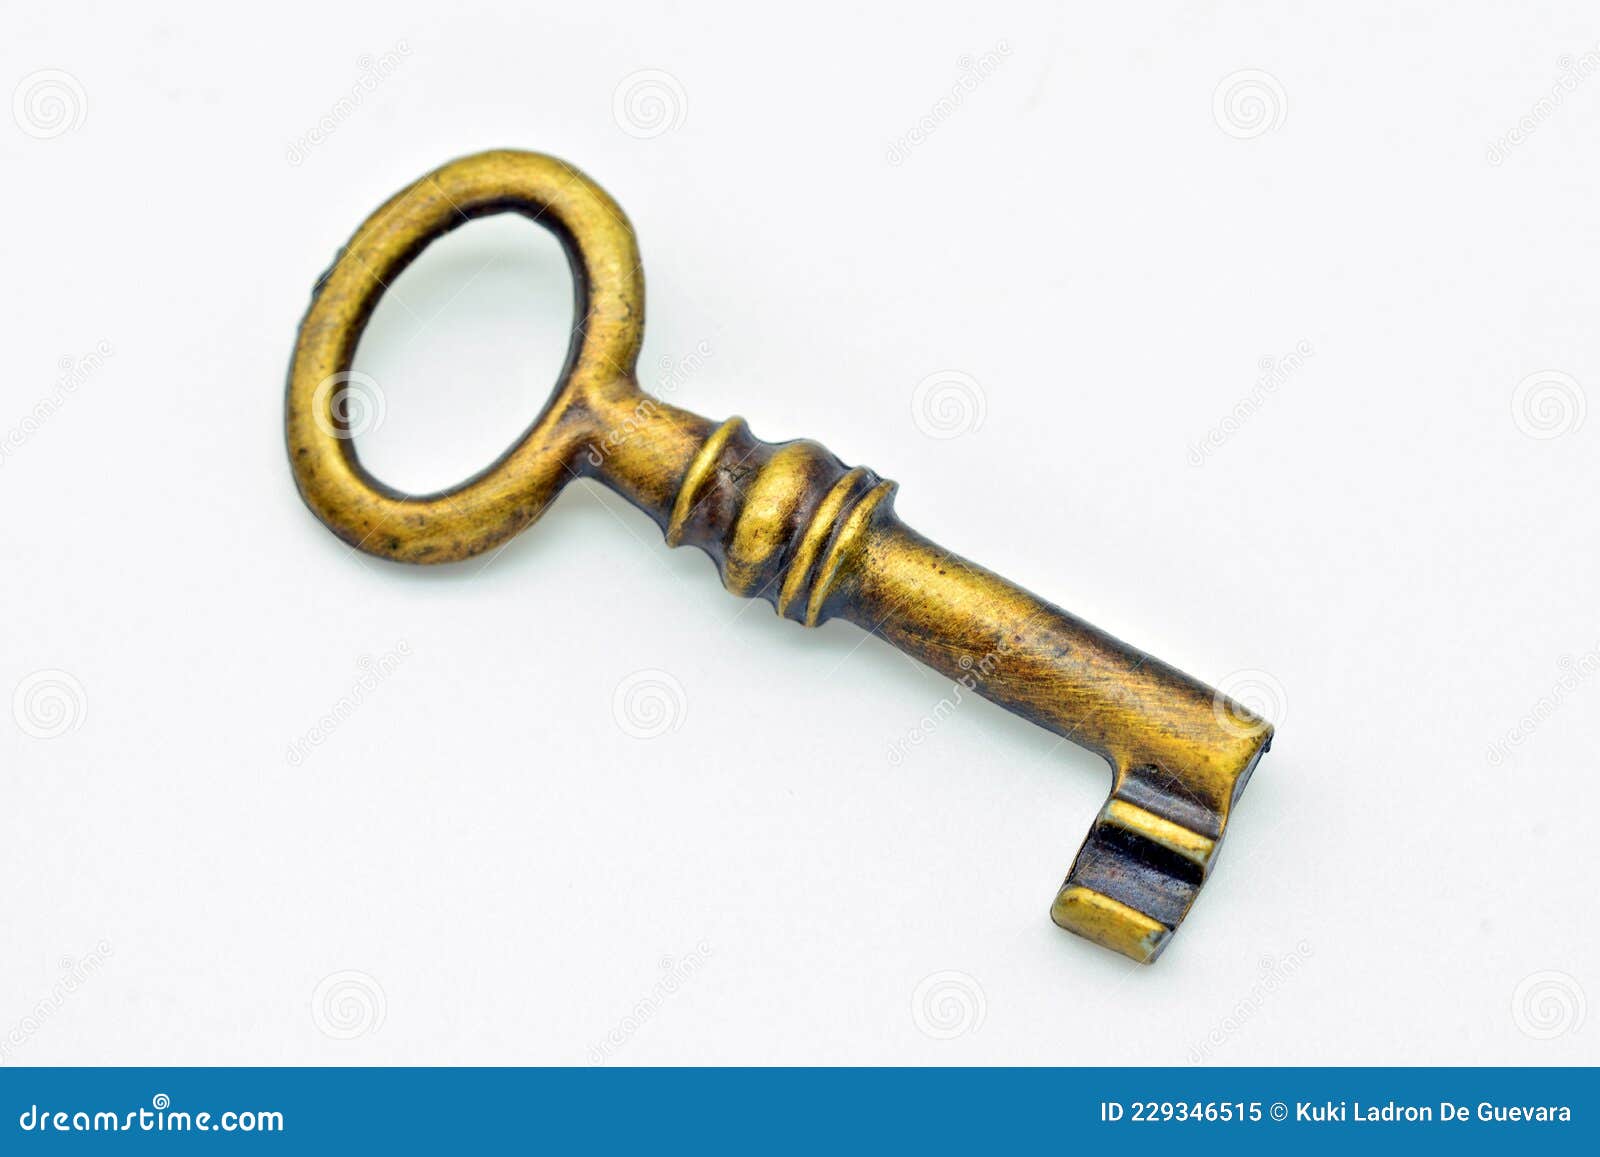 keychain with old keys